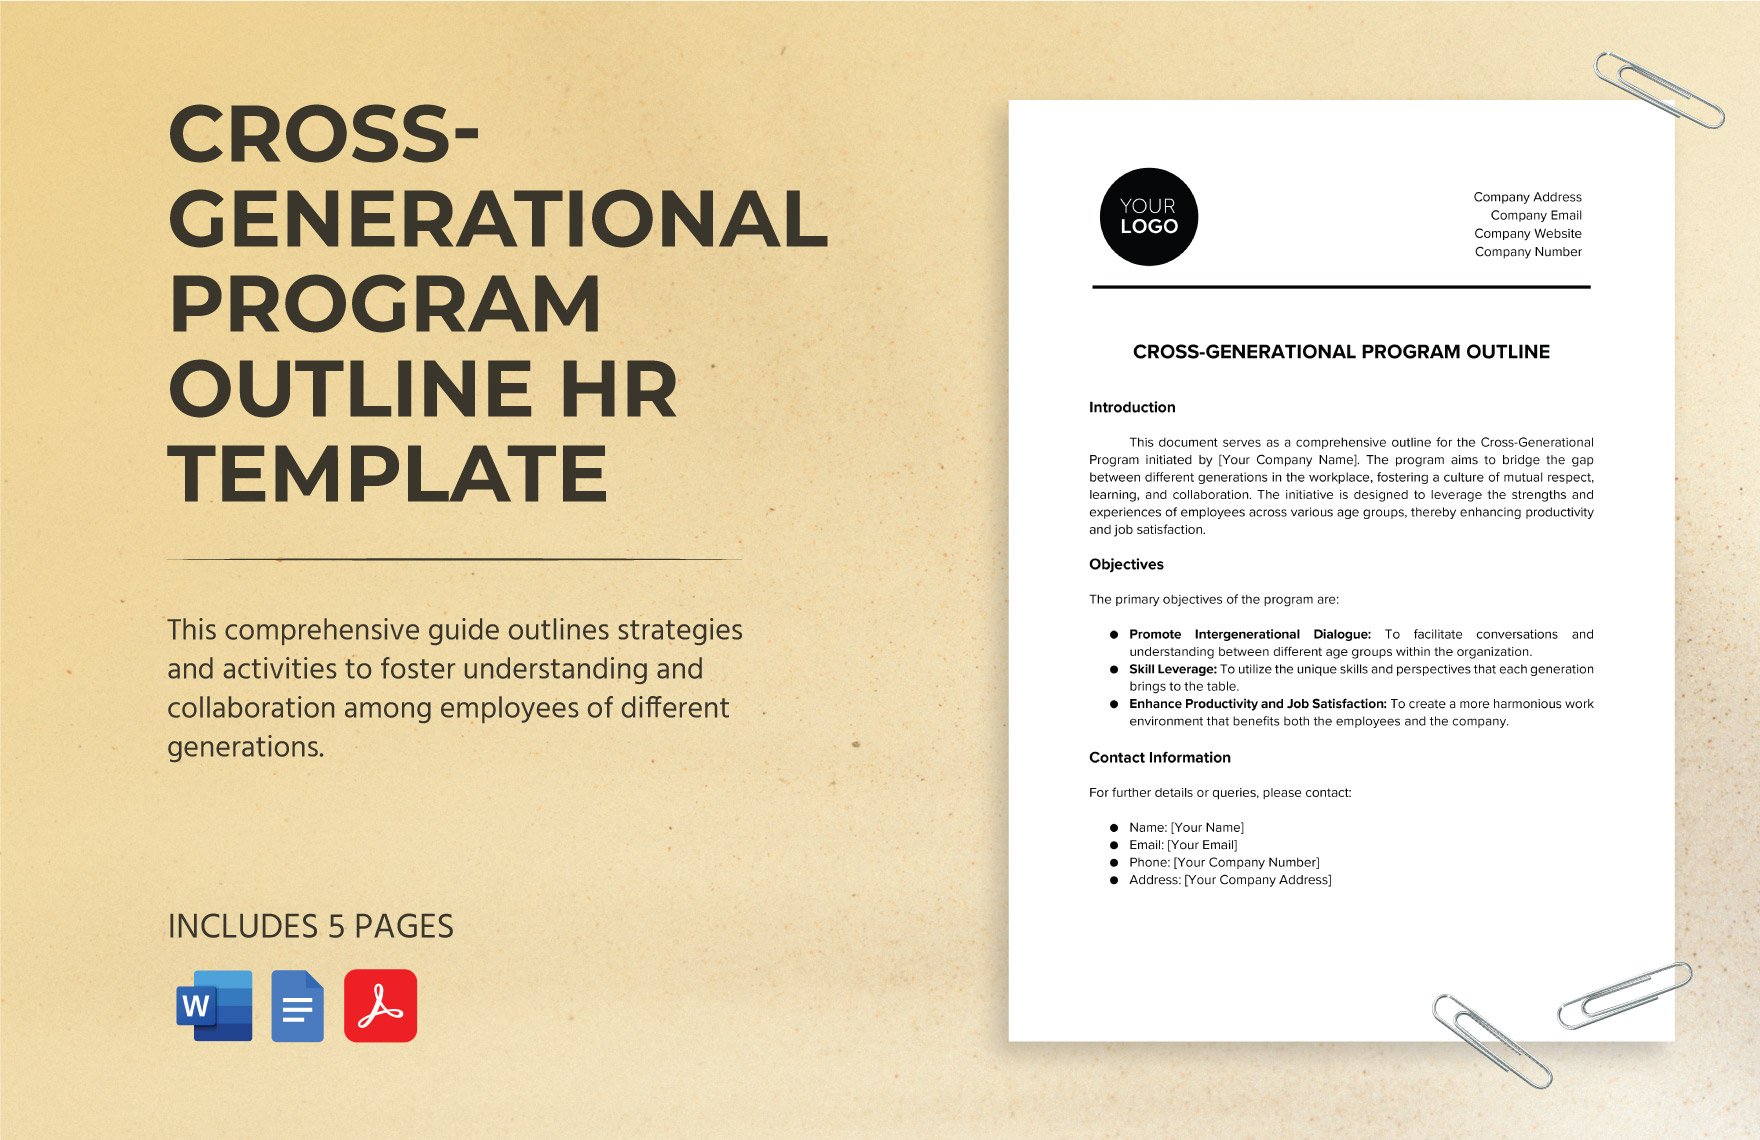 Cross-Generational Program Outline HR Template